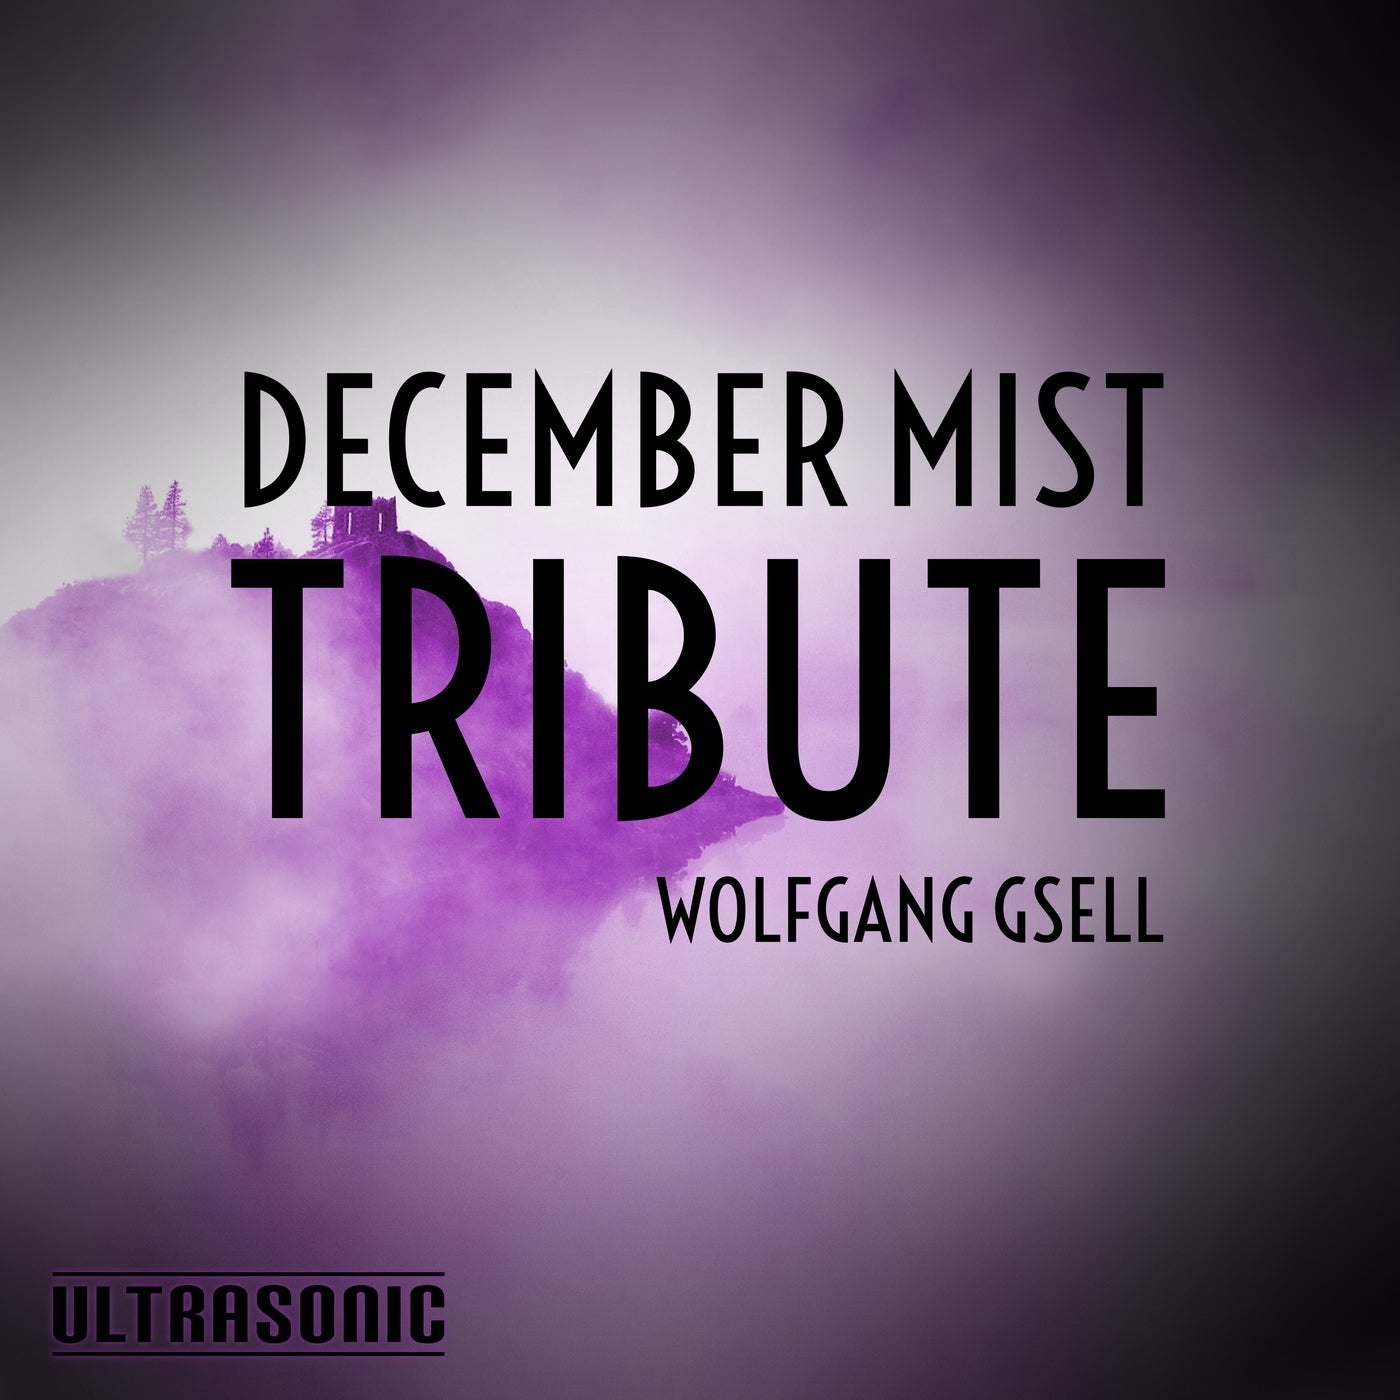 December Mist Tribute